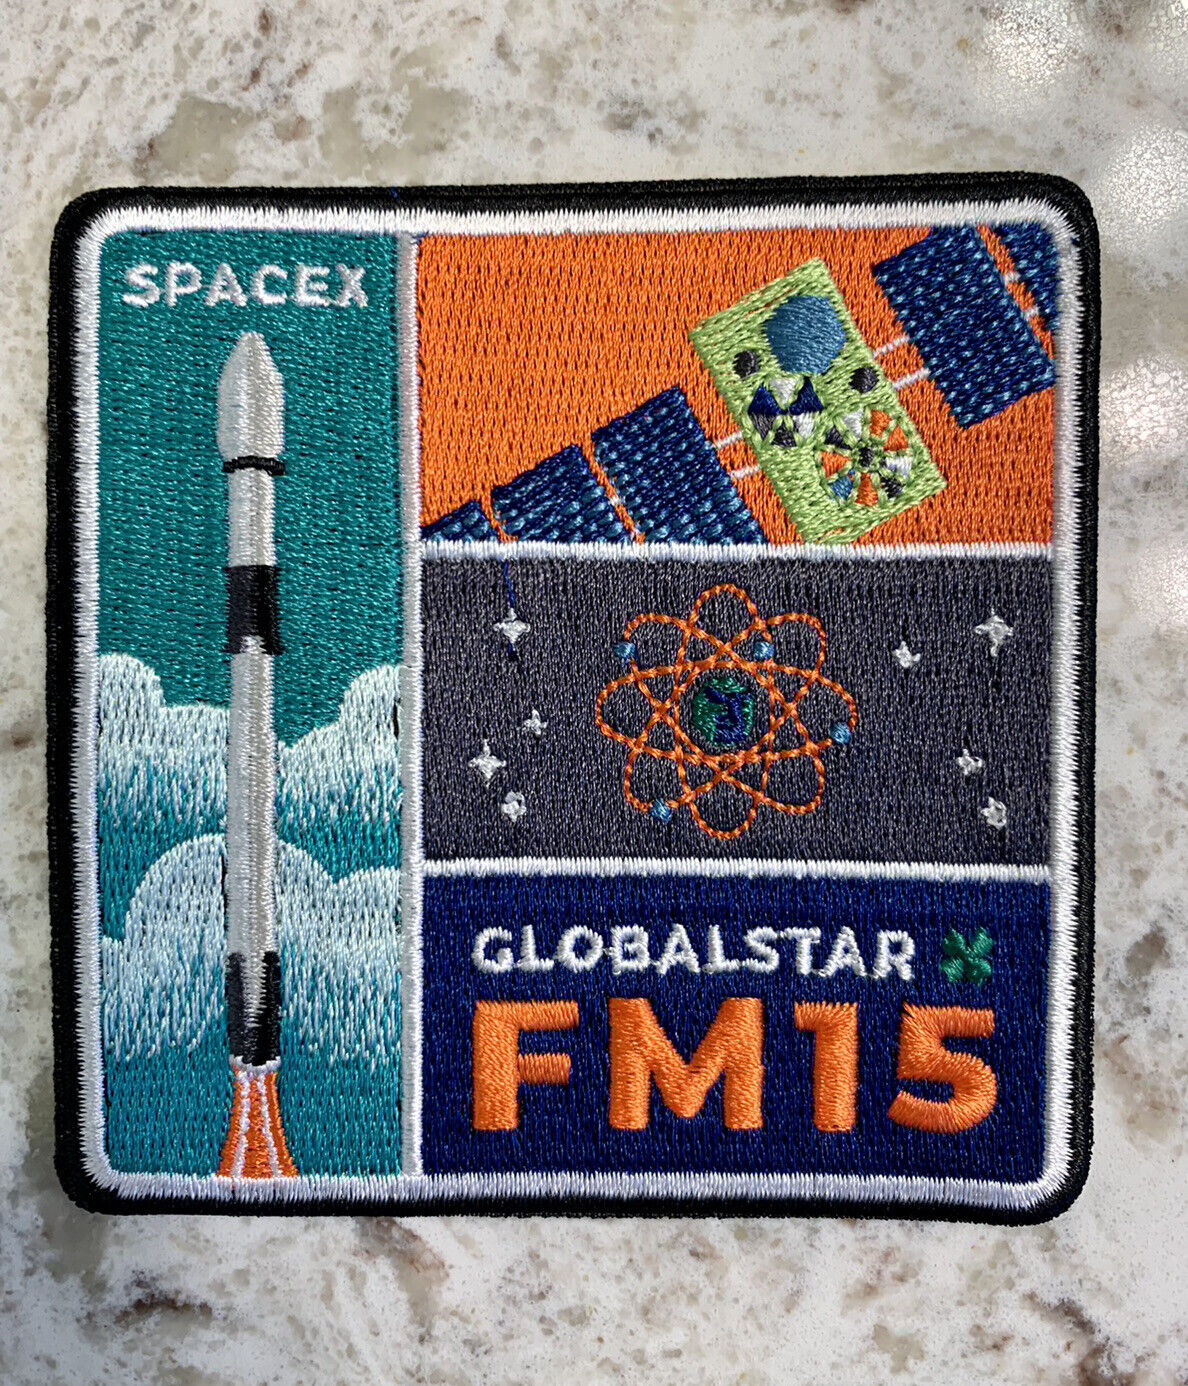 Original SPACEX GLOBALSTAR FM 15 - FALCON 9 SATELLITE MISSION Patch NASA